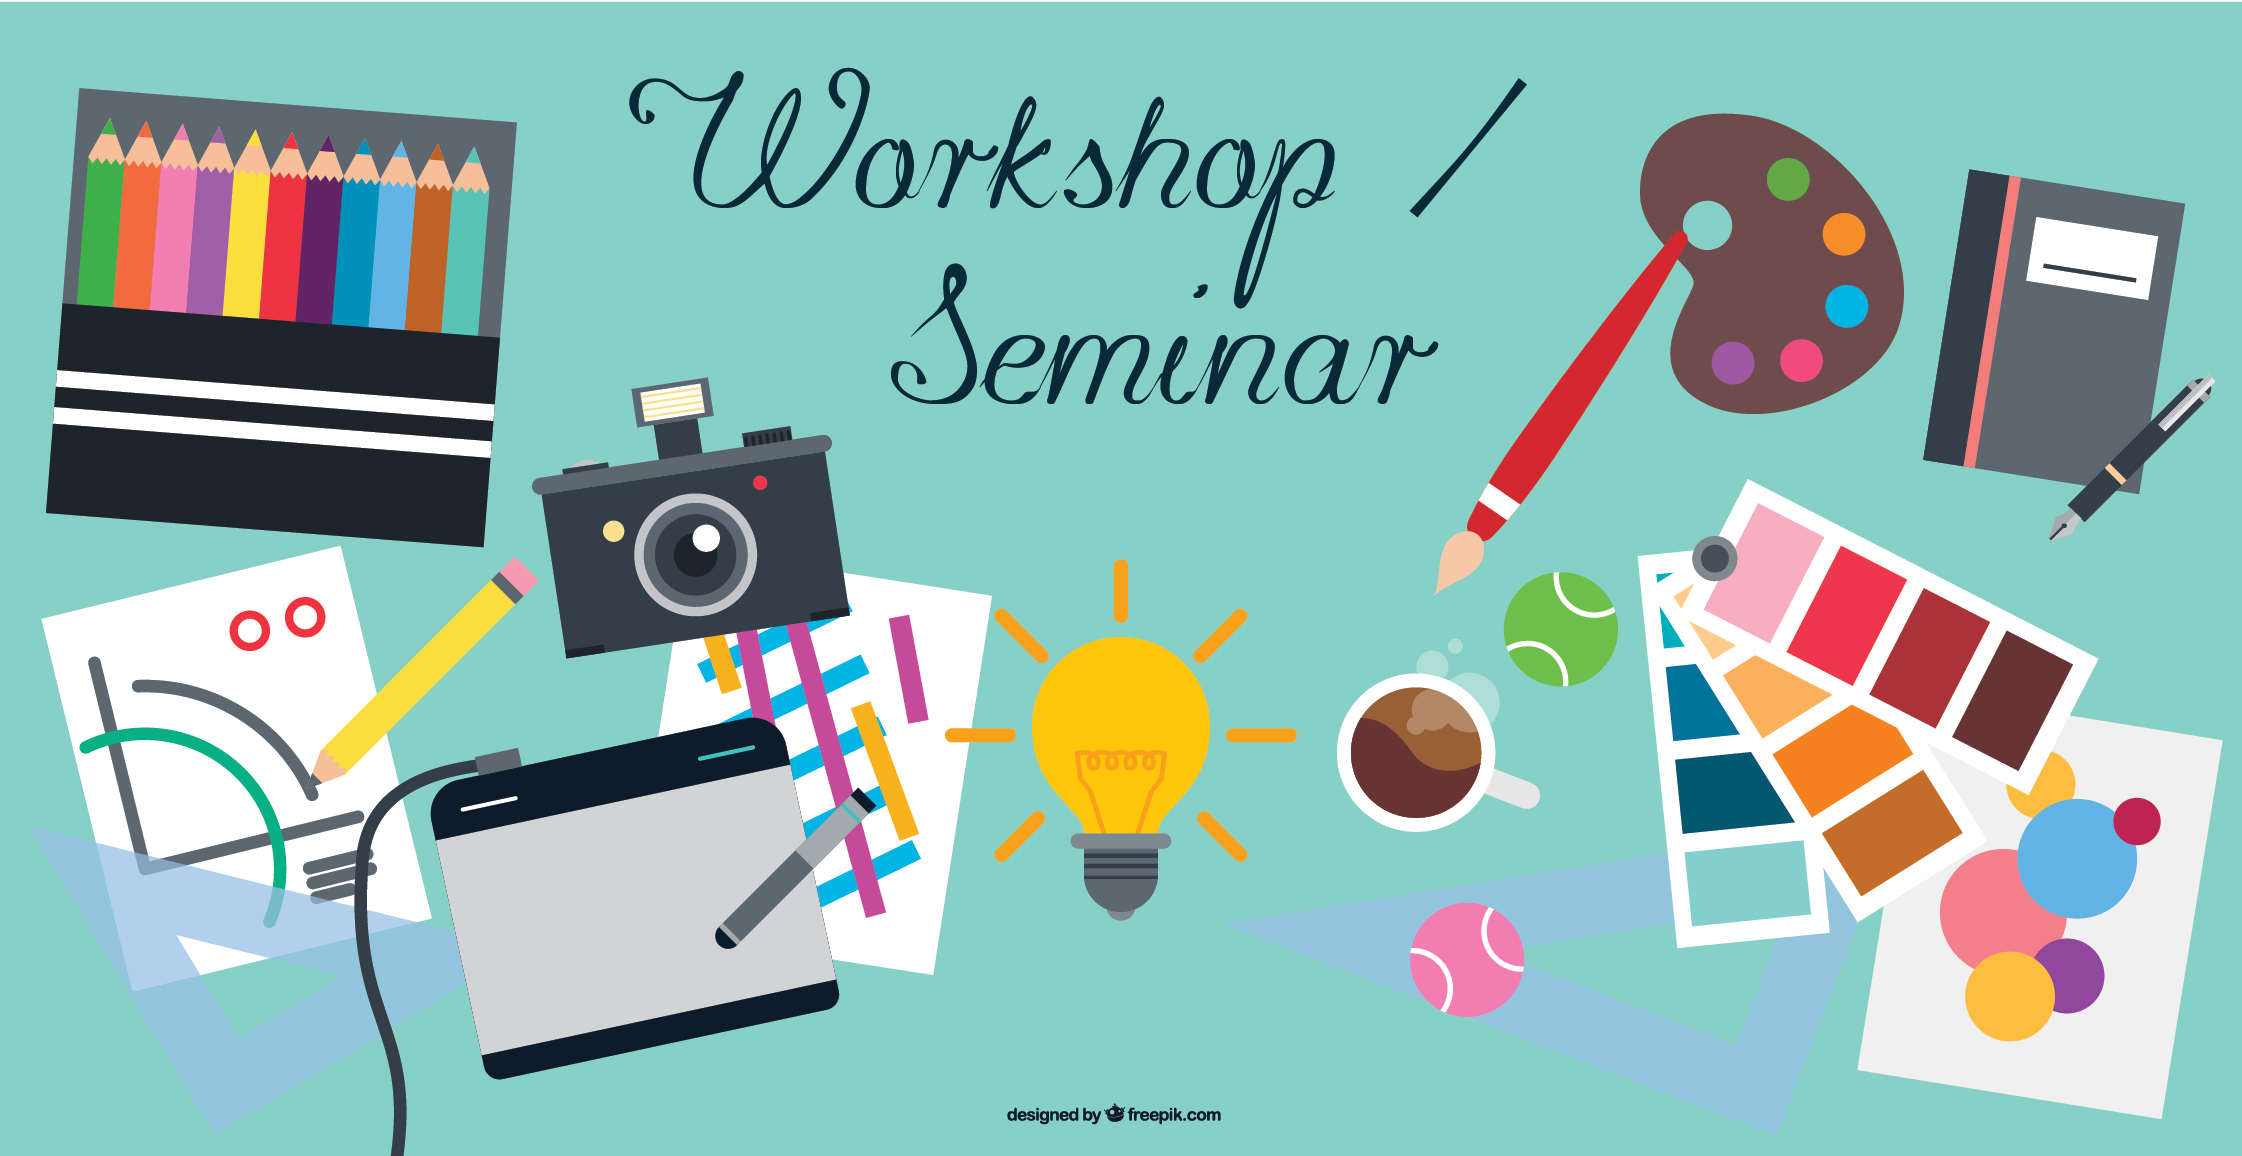 Workshop / Seminar